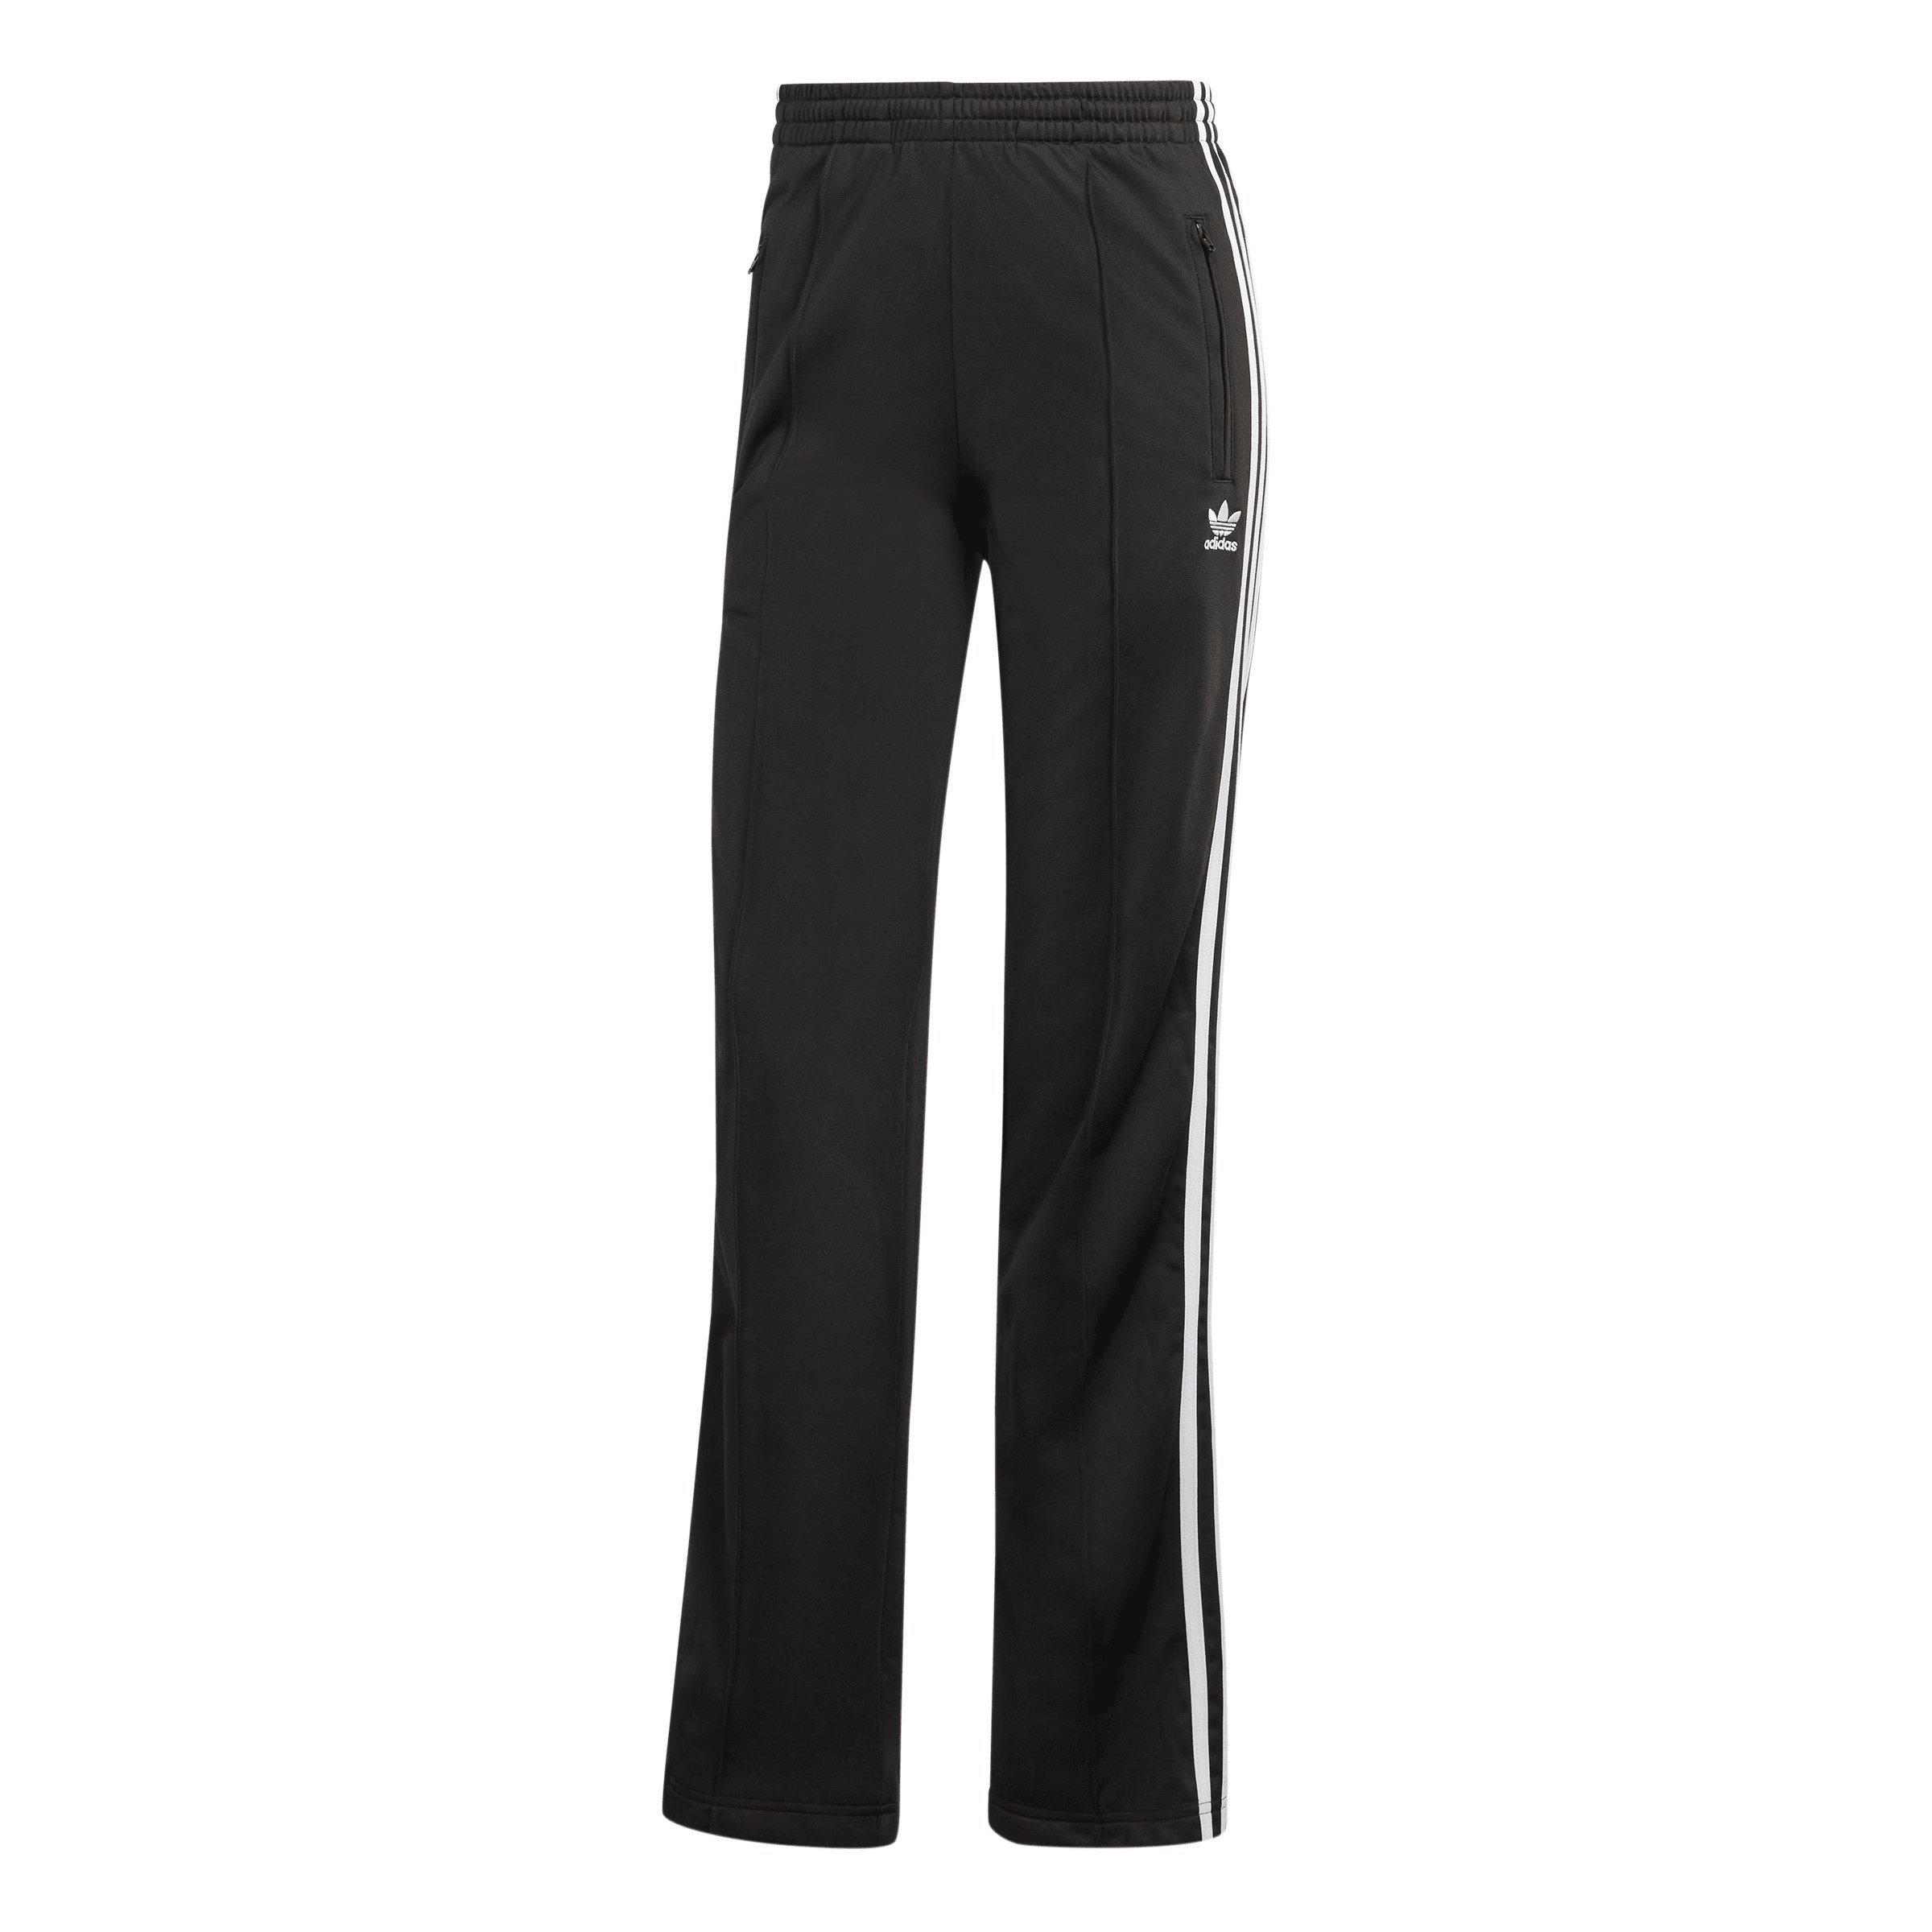 Men's Clothing - Adicolor Classics Firebird Track Pants - Black